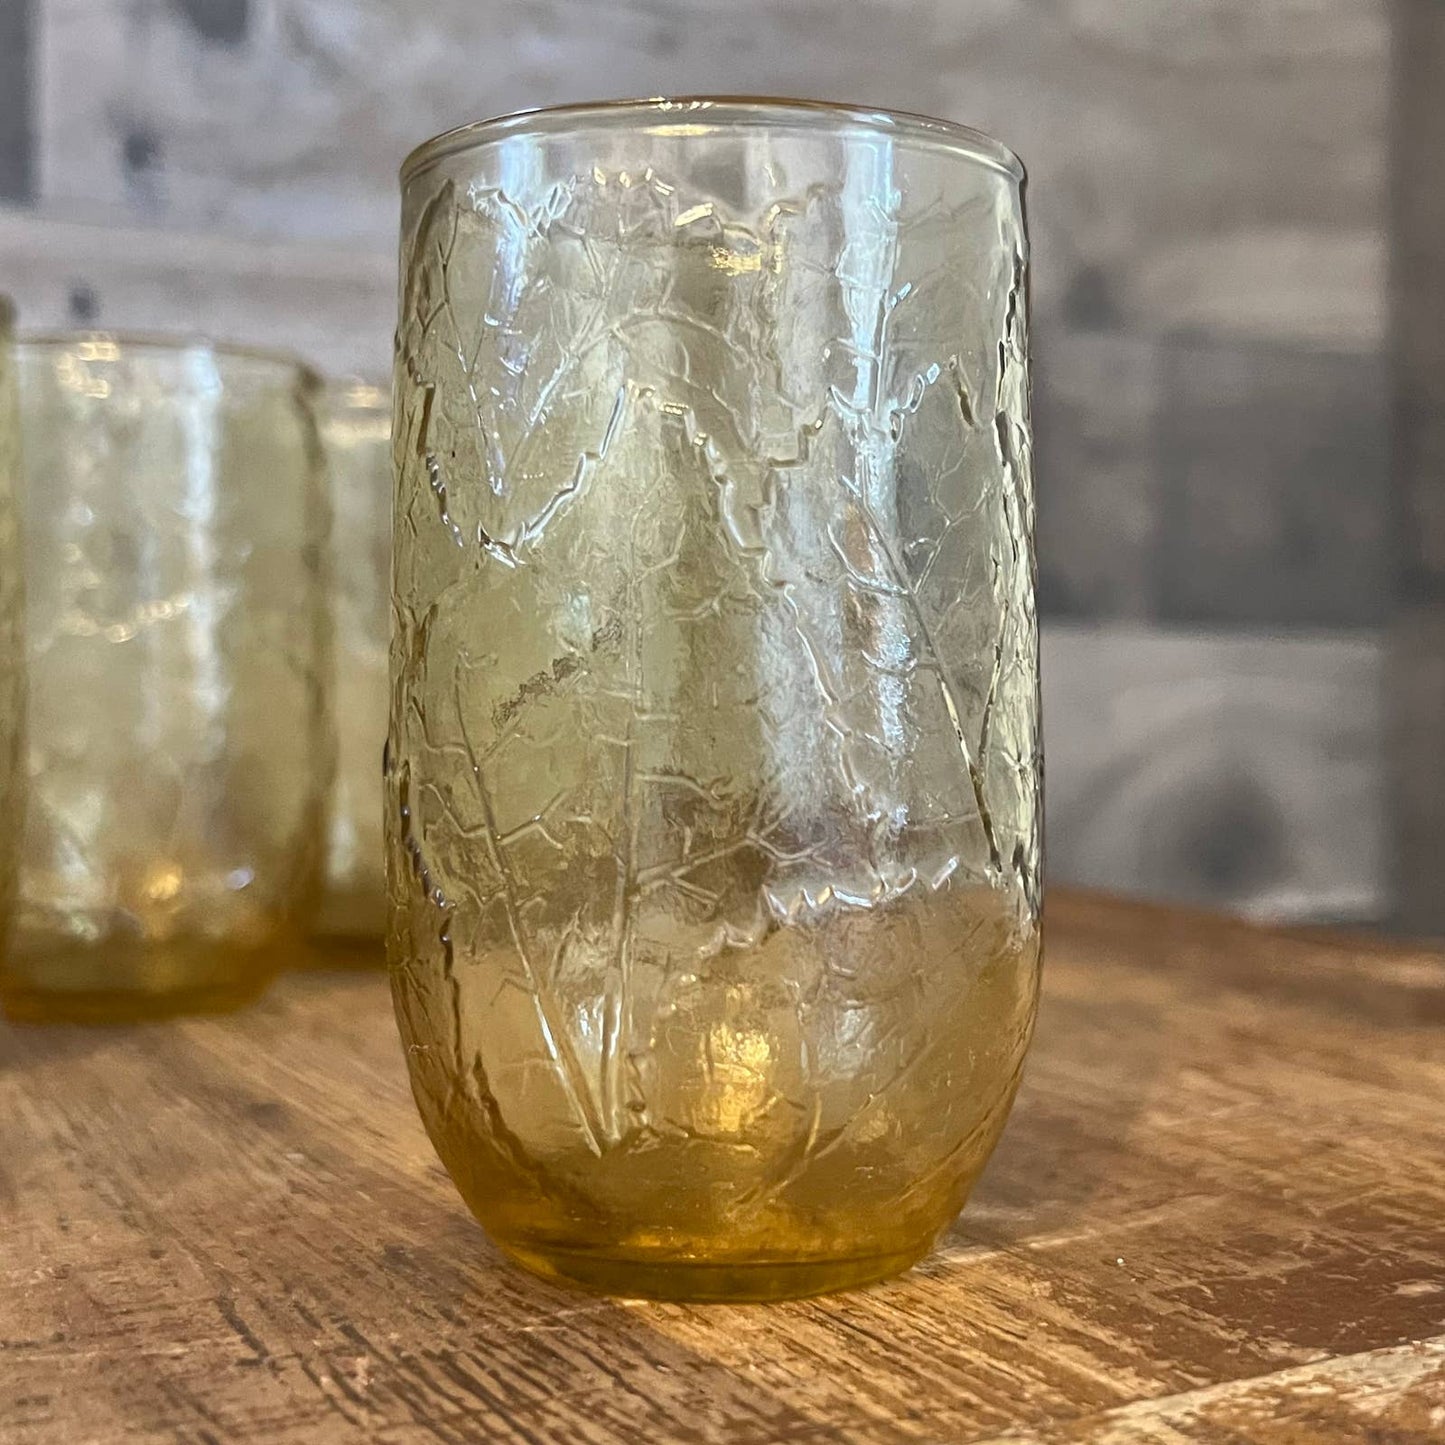 Anchor Hocking Sherwood amber glass leaf textured glasses - set of 6